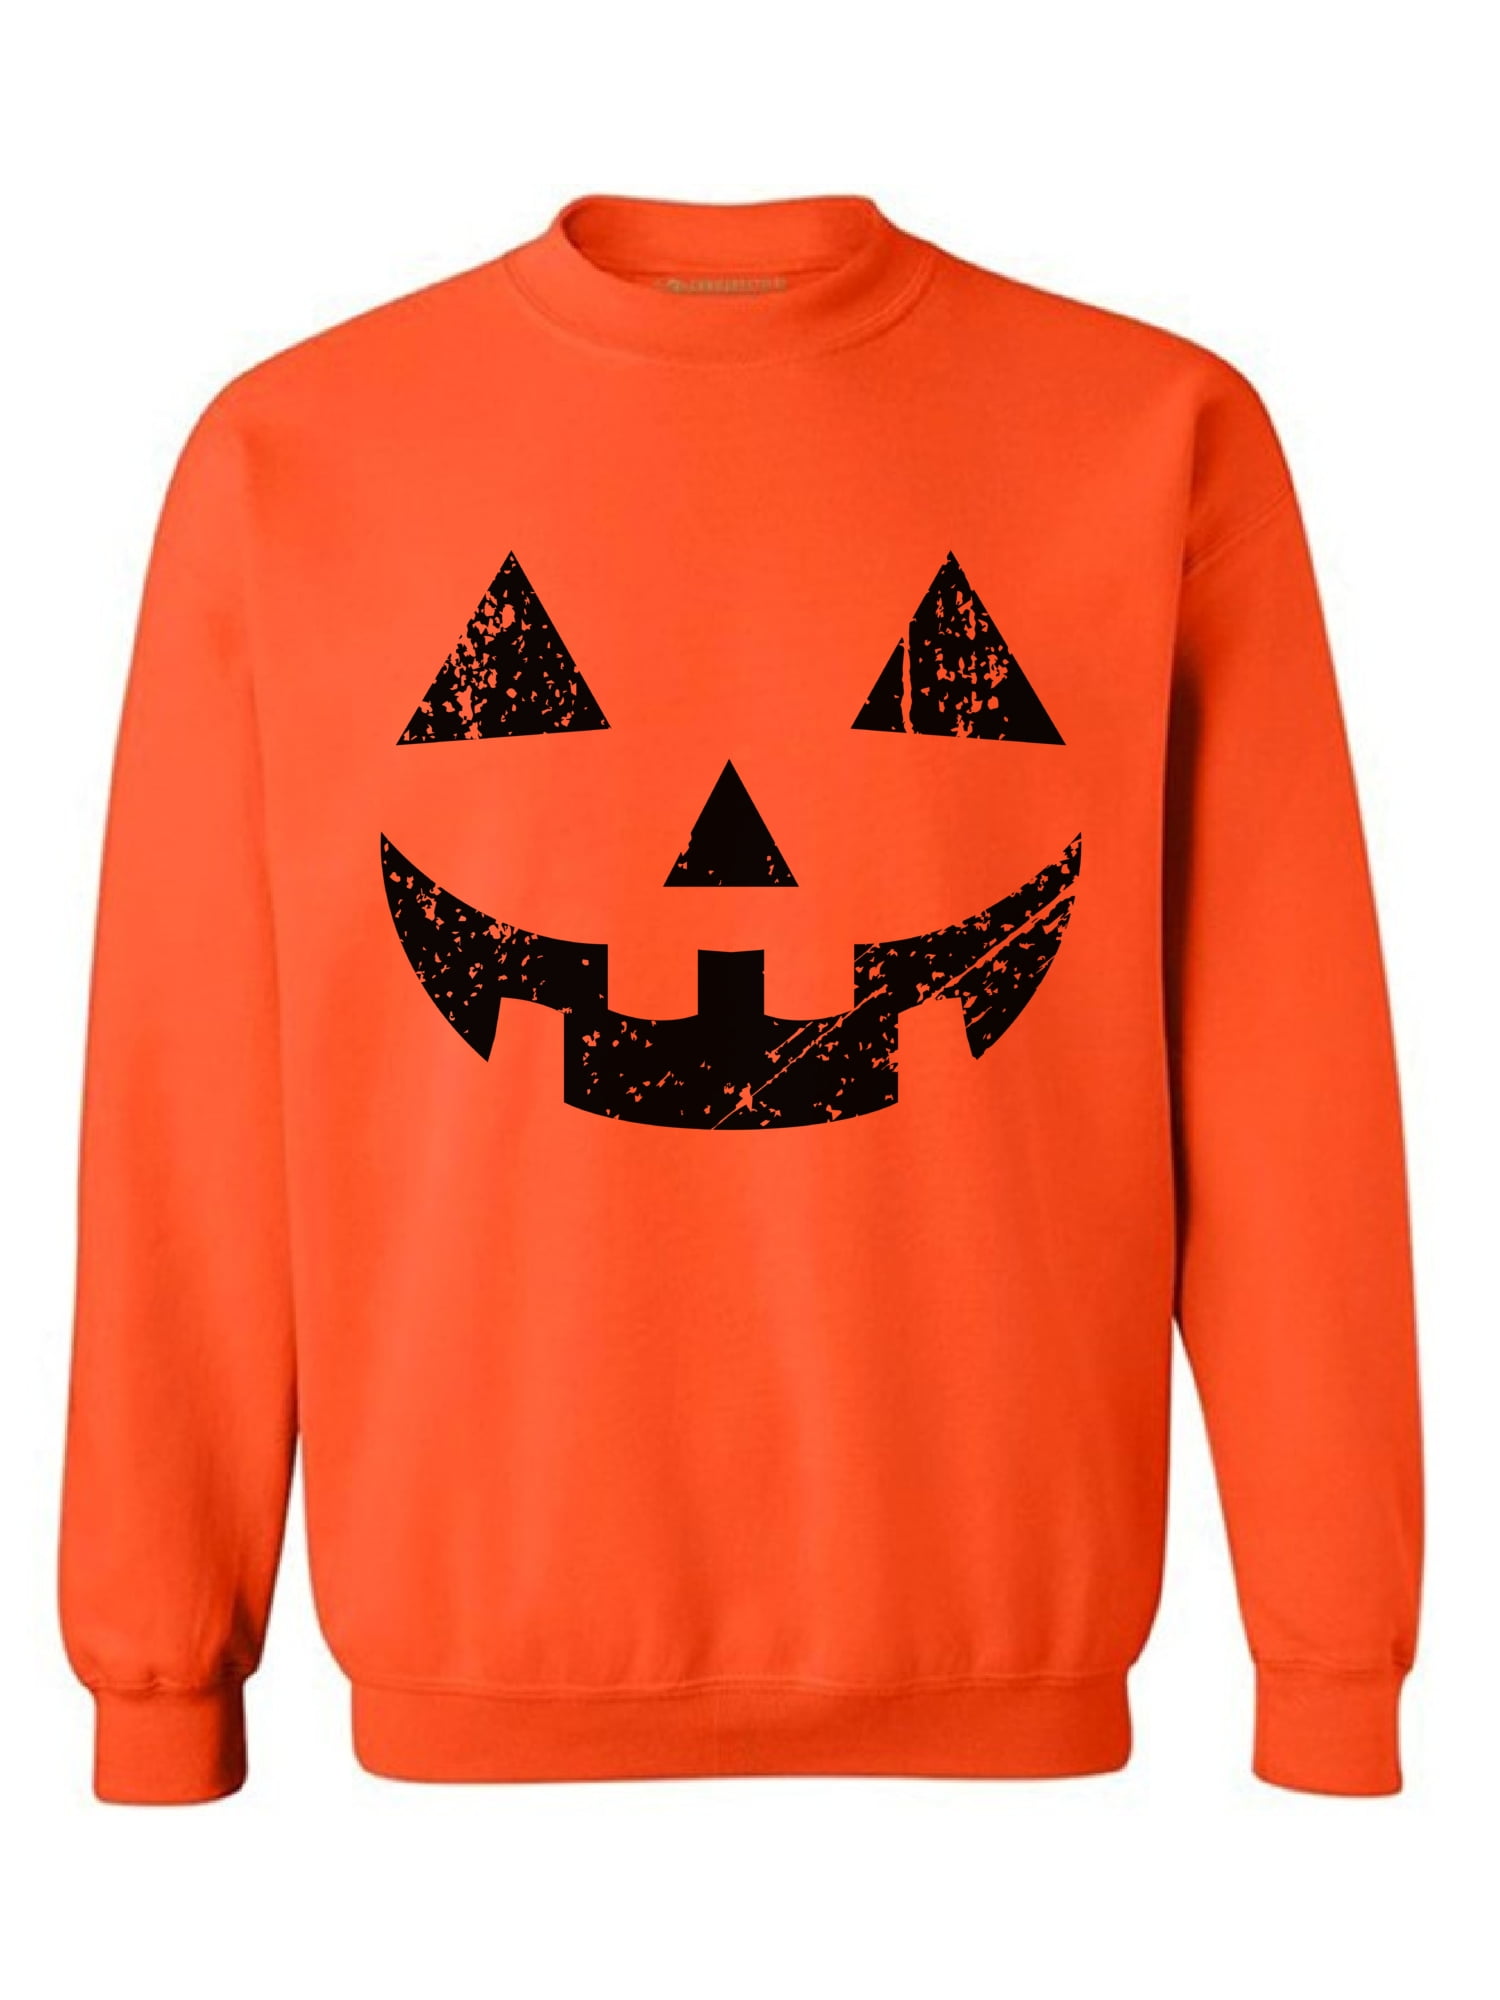 Sweatshirt Spooky Mama Sweatshirt Women's Halloween Sweatshirt Halloween Adult Sweatshirt Halloween Sweatshirt for Women